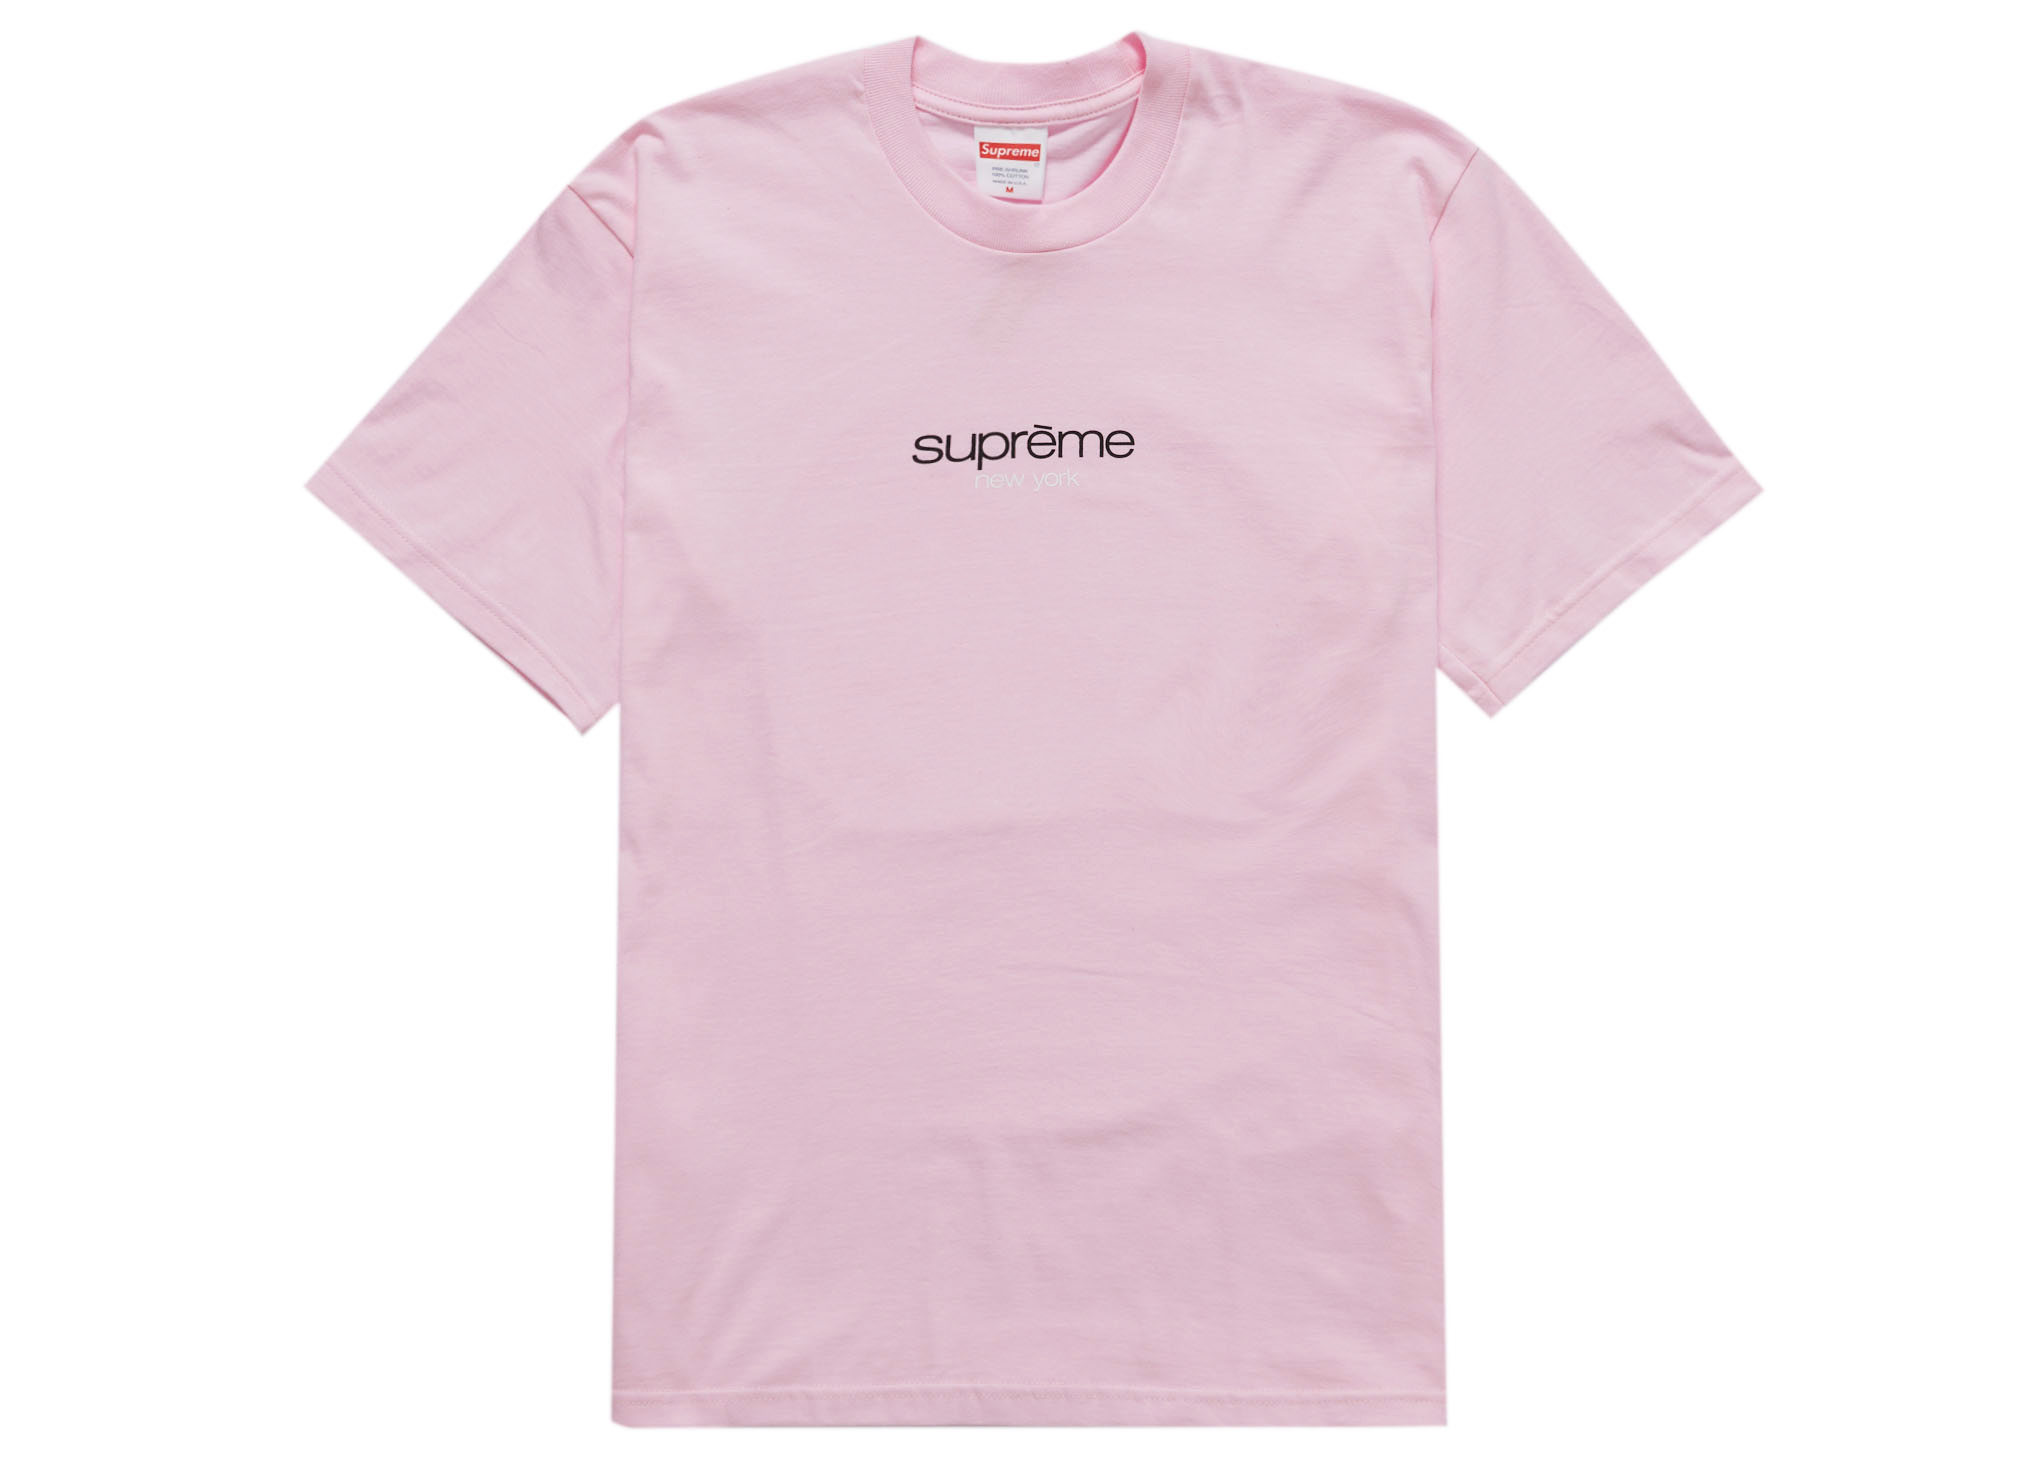 Kith Classic Logo Tee - Light Pink Lサイズ